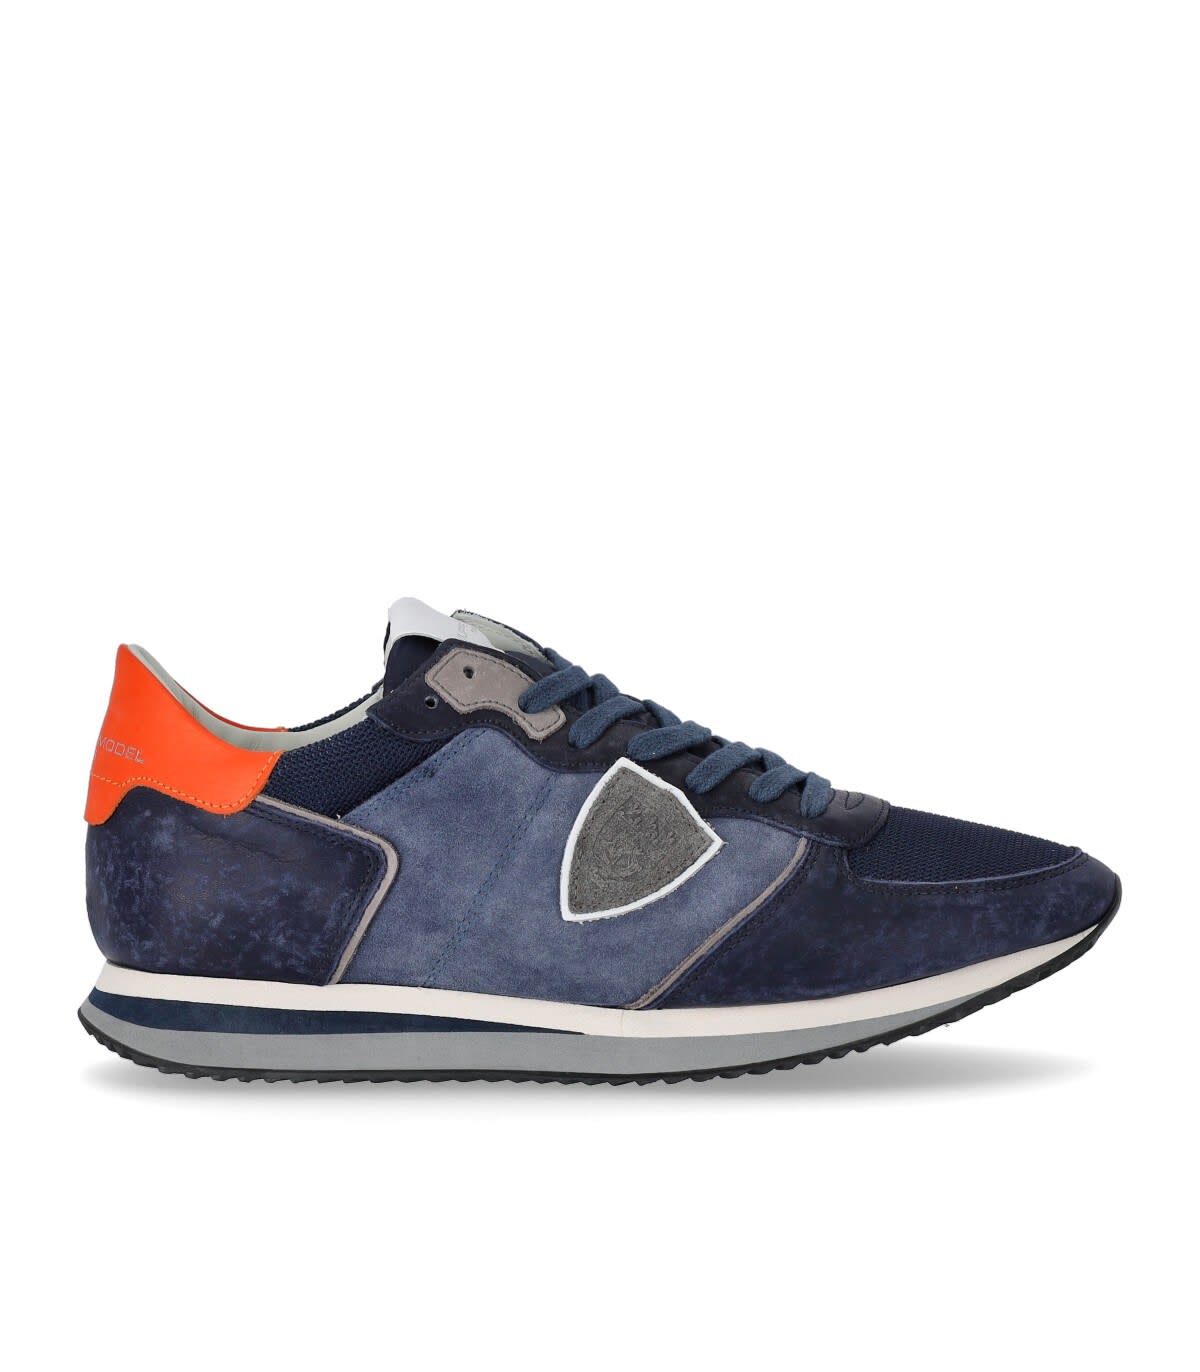 Philippe Model Trpx Low Denim Blue Orange Sneaker